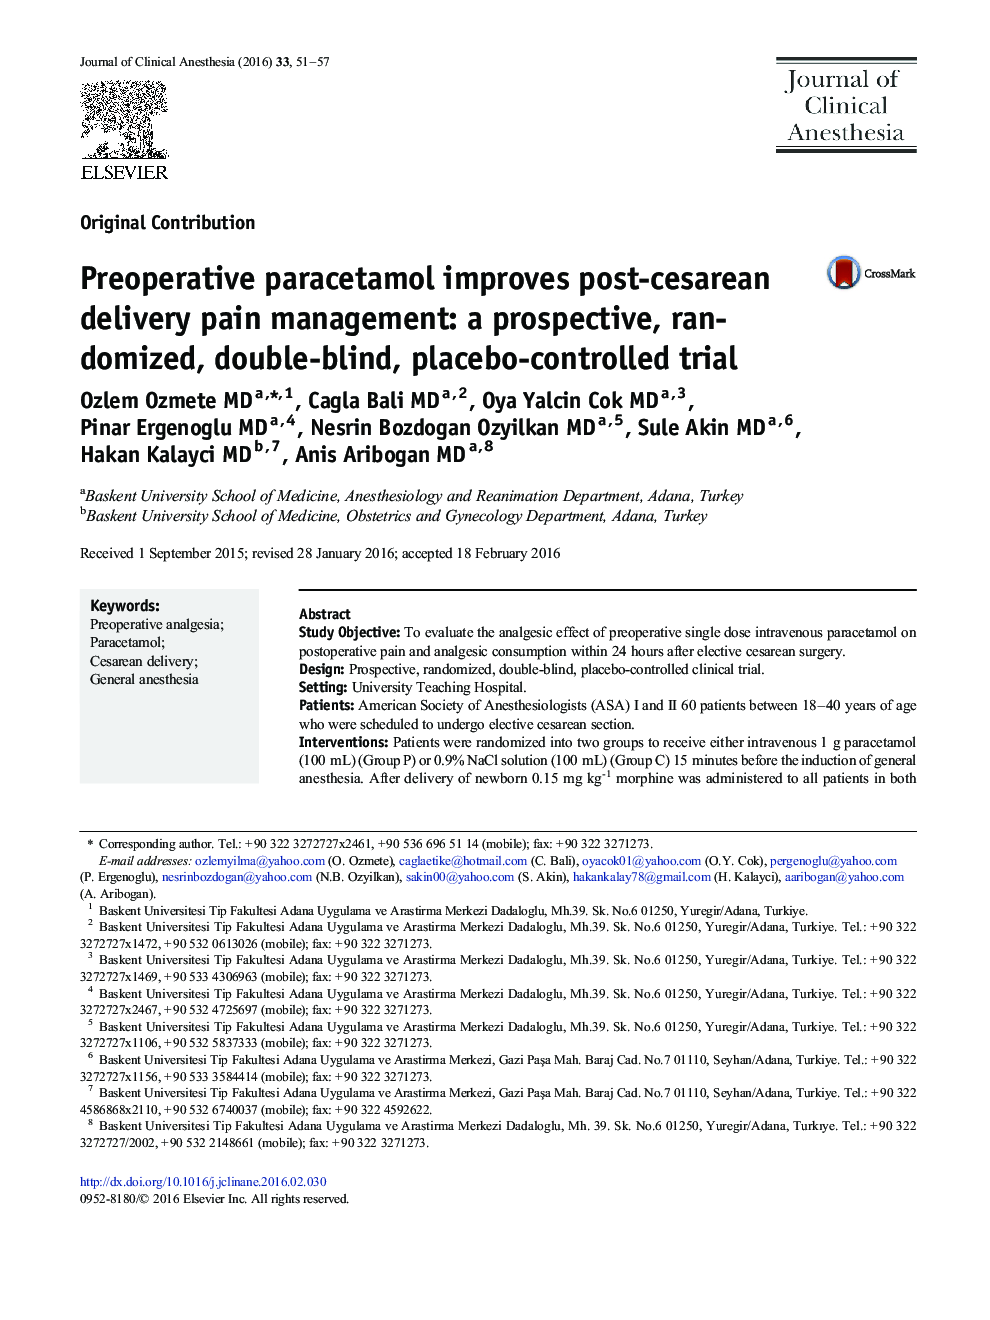 Preoperative paracetamol improves post-cesarean delivery pain management: a prospective, randomized, double-blind, placebo-controlled trial